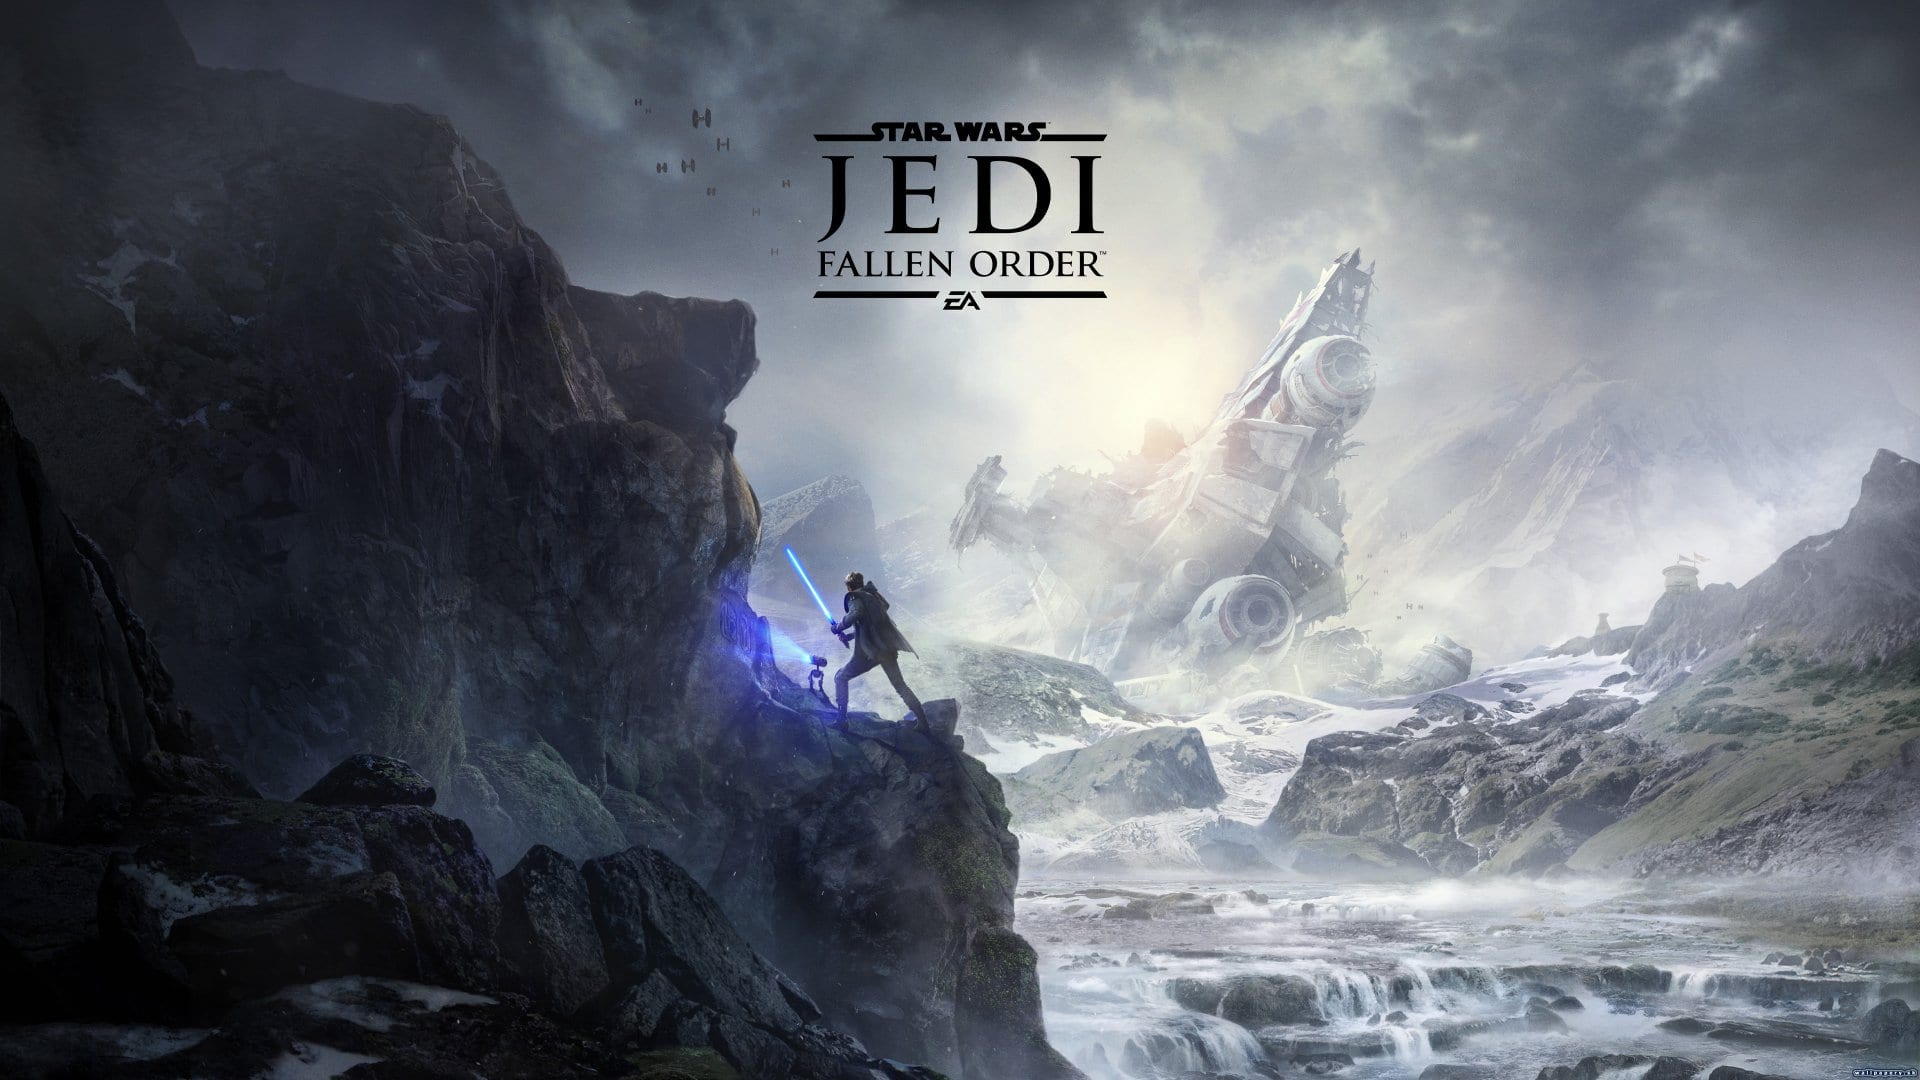 4K & HD Star Wars: Jedi Fallen Order Wallpaper You Need to Make Your Desktop Background